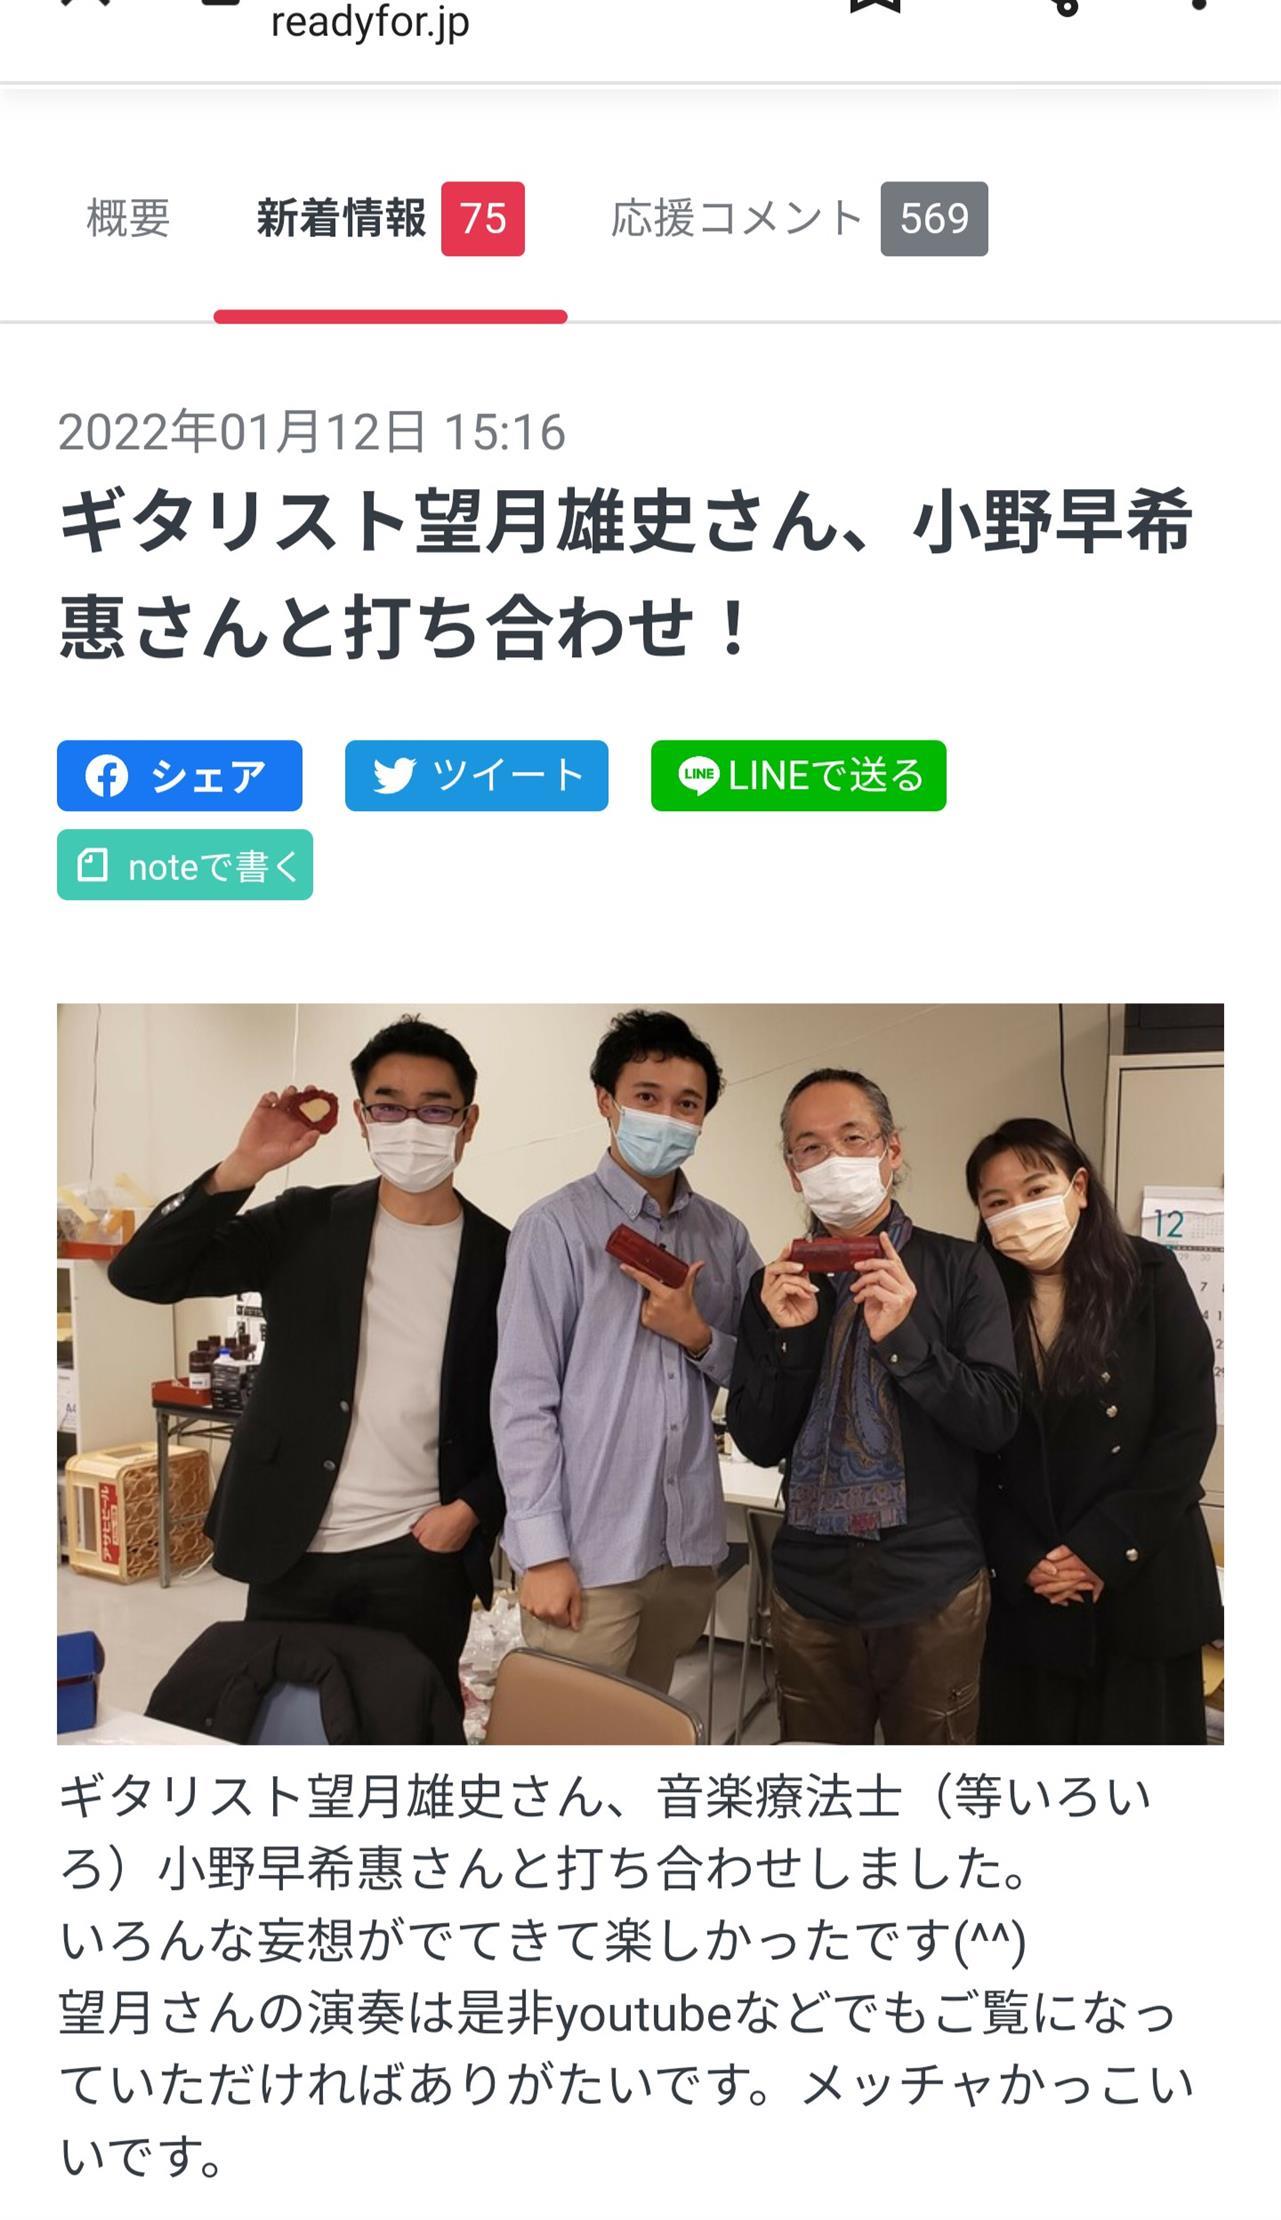 Ready for  東京医科歯科大学Voice Retrieverチーム記事に掲載下さいました